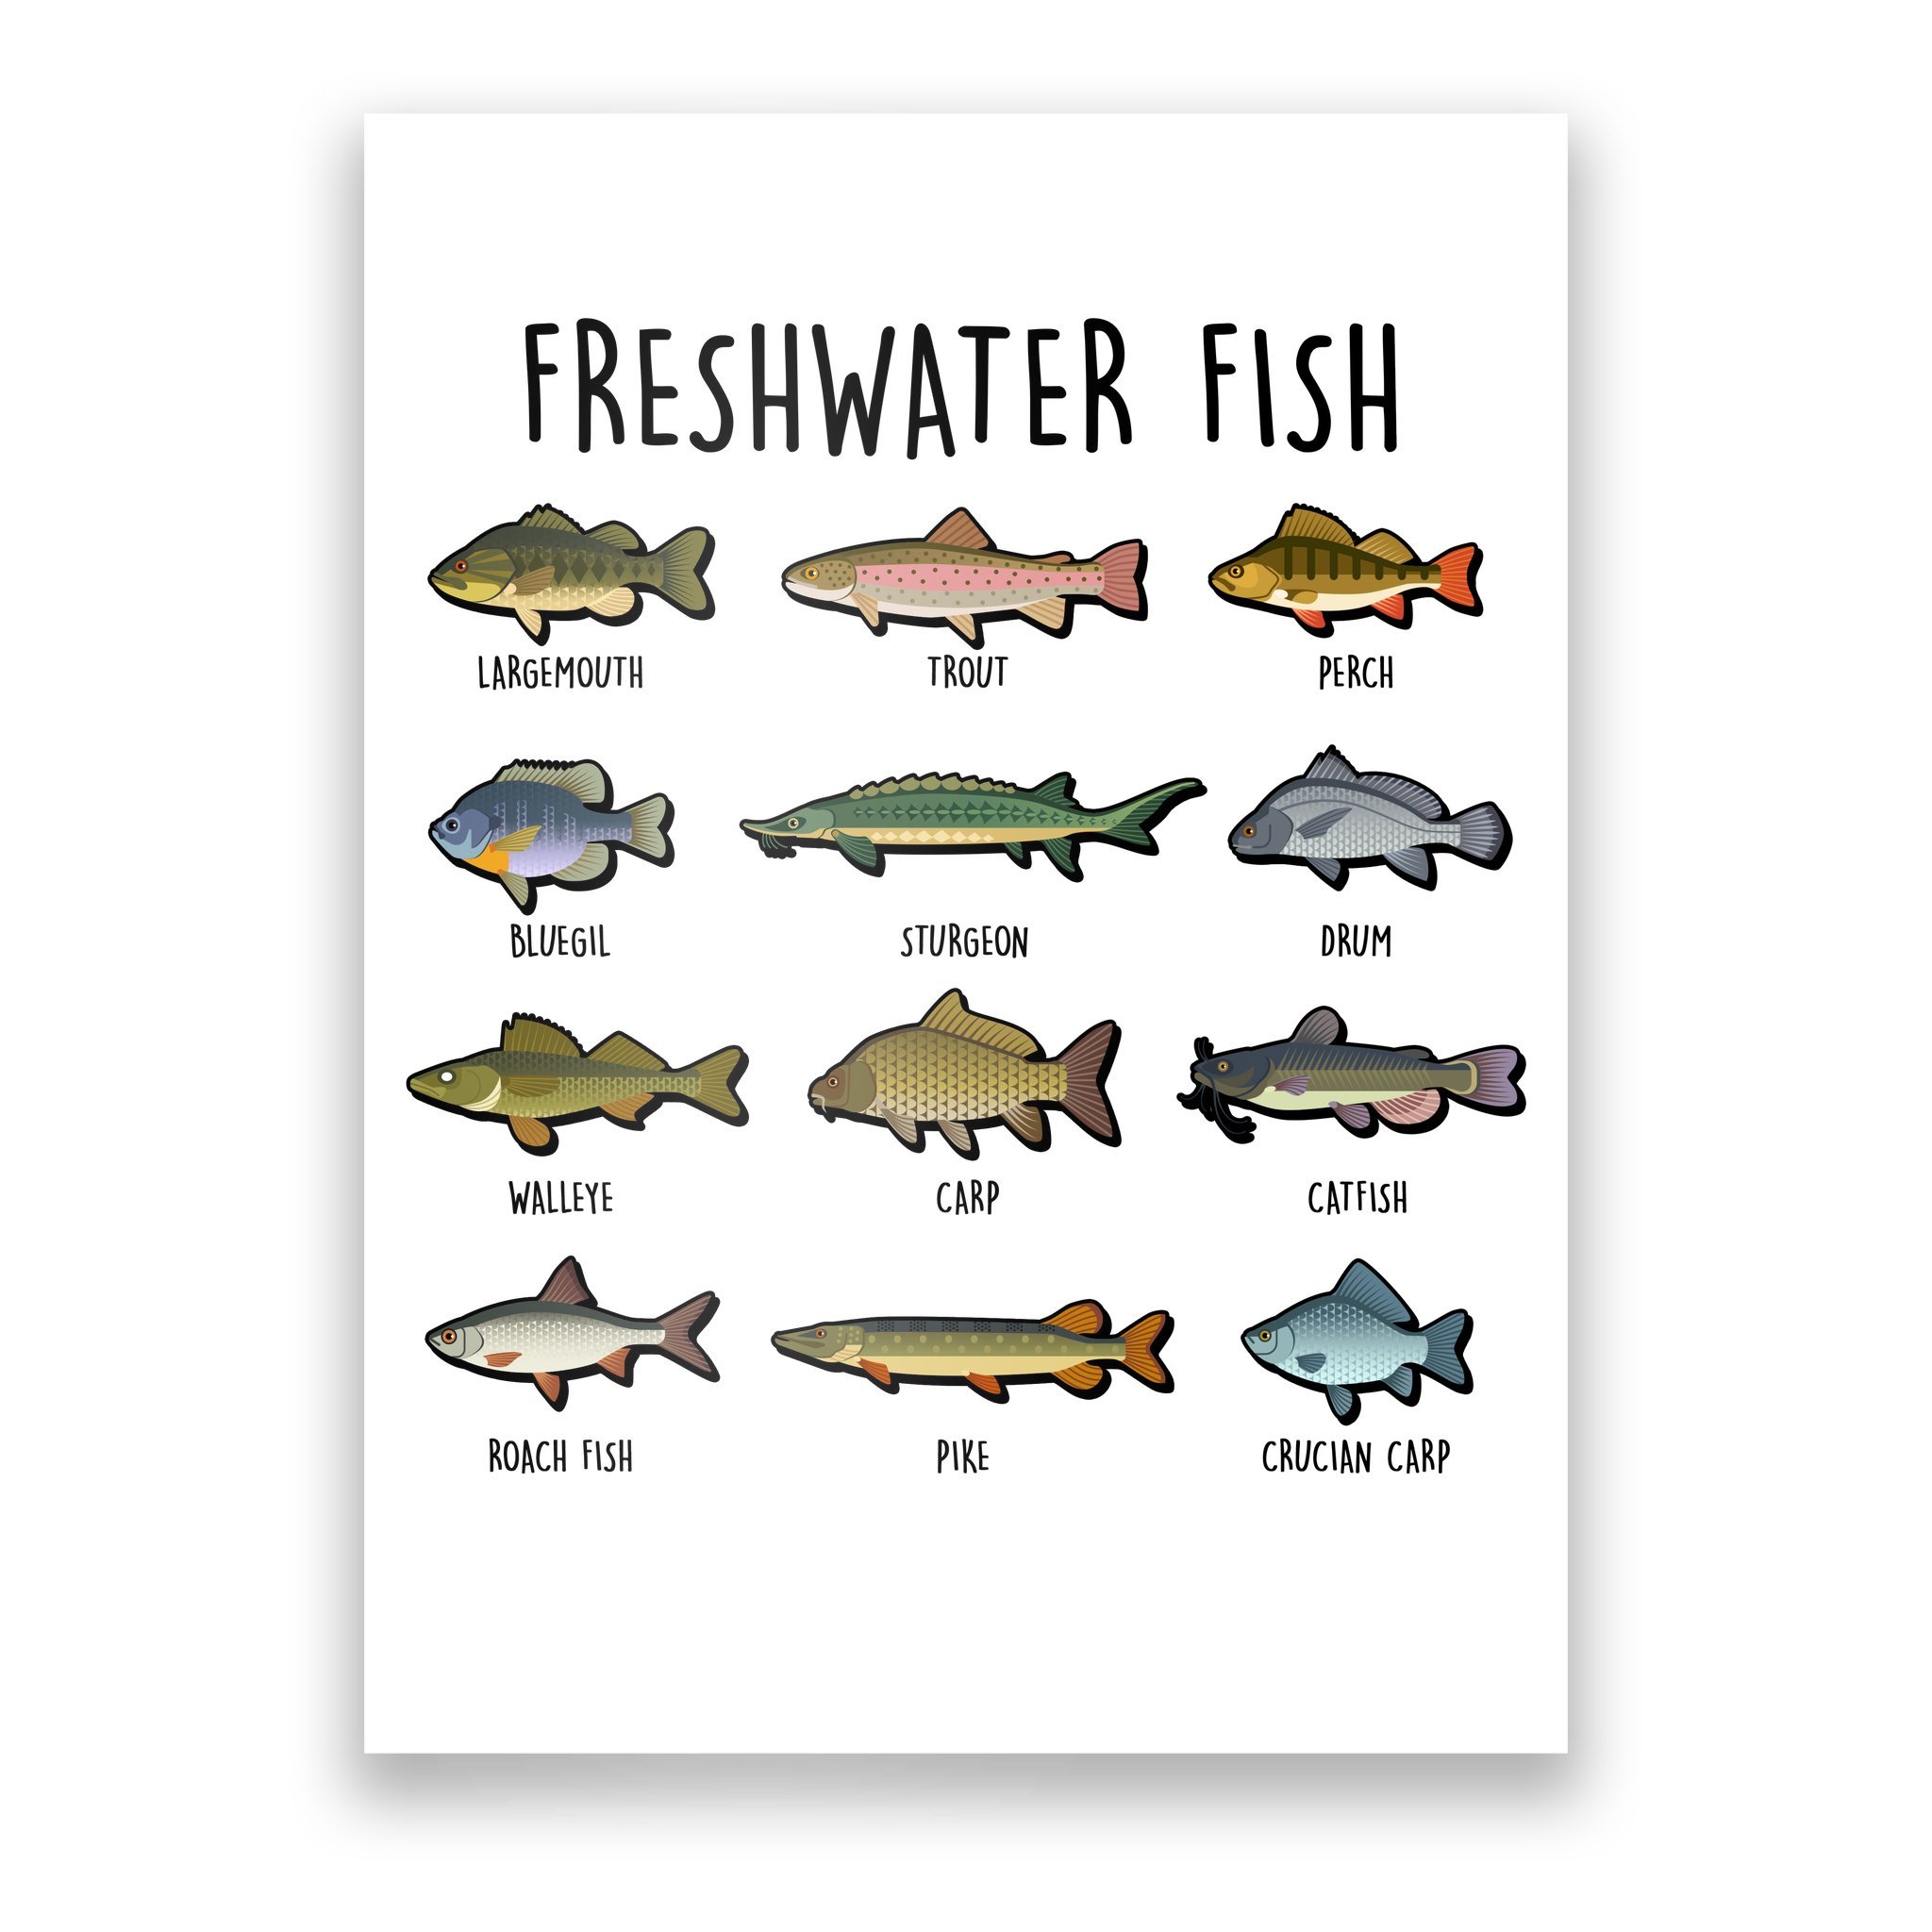 types of fish